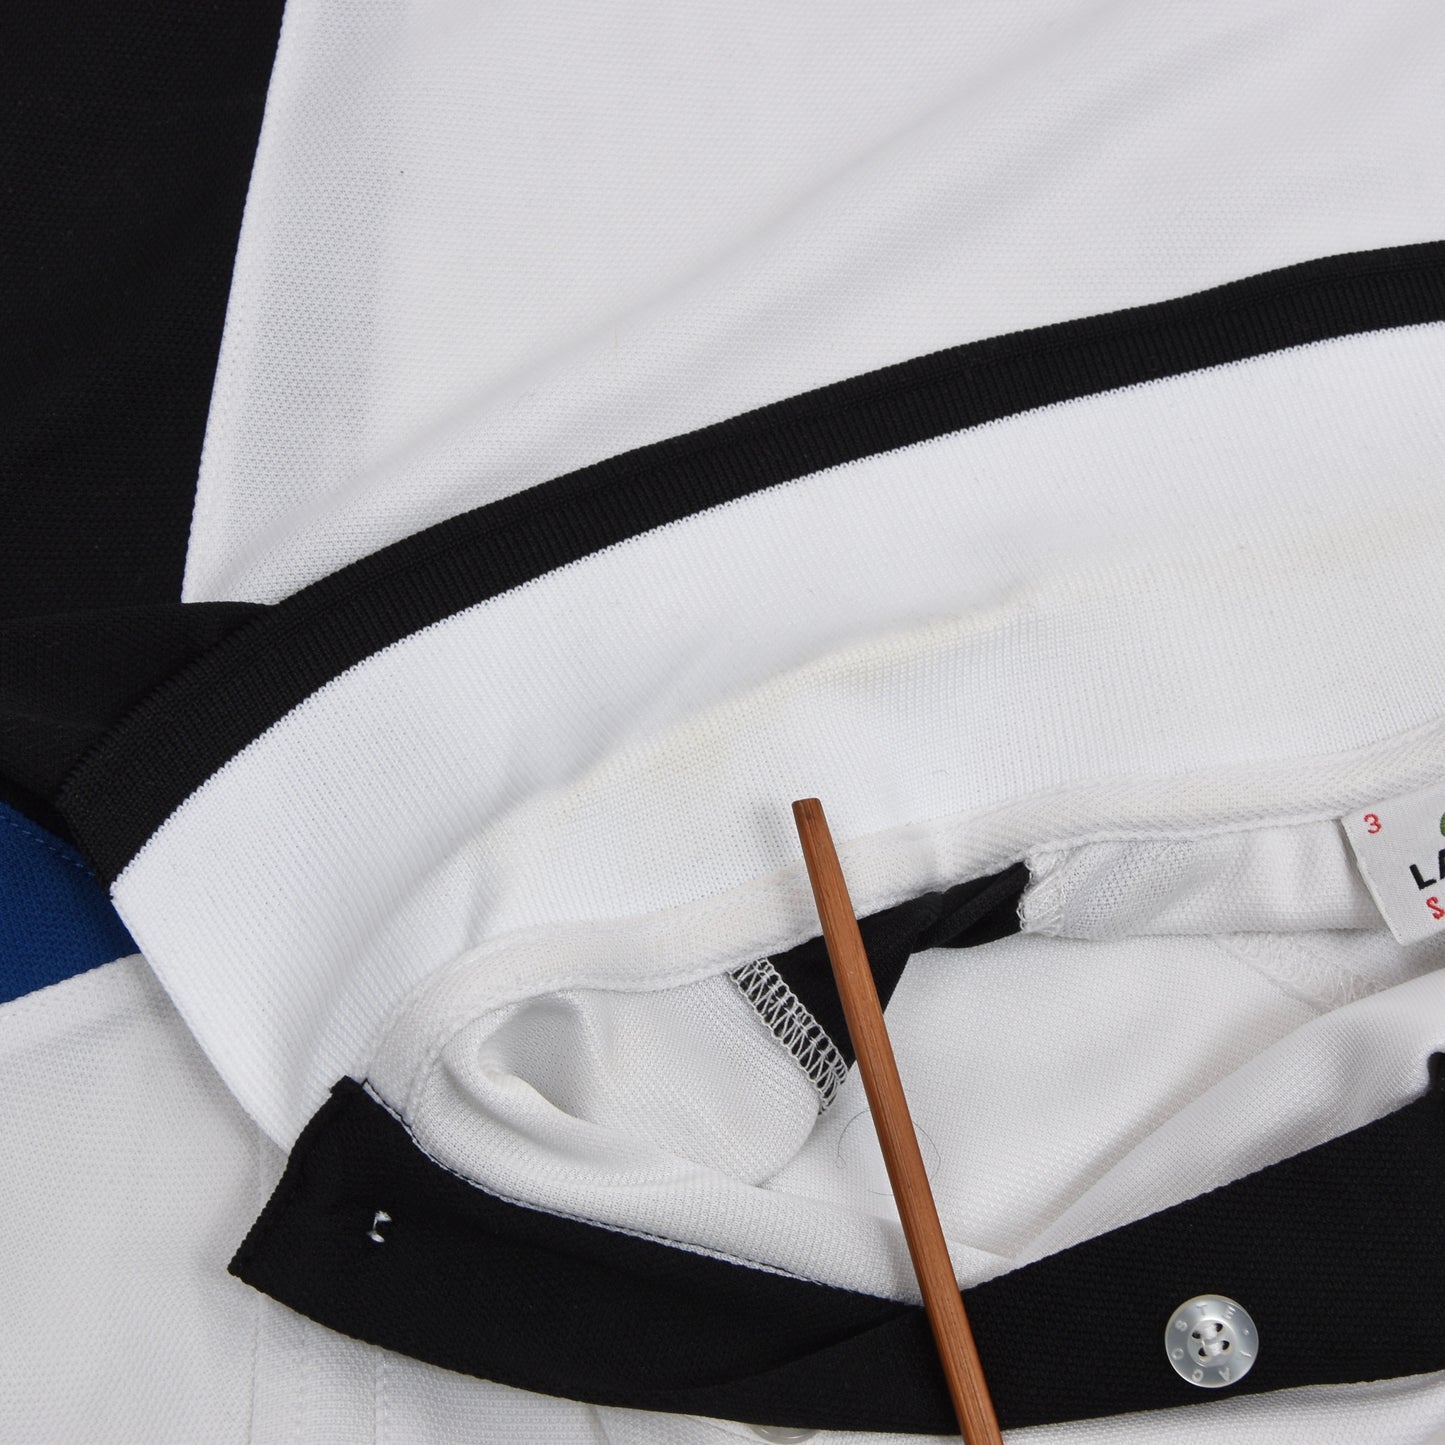 Lacoste Sport Polo Shirt Size 3 - White